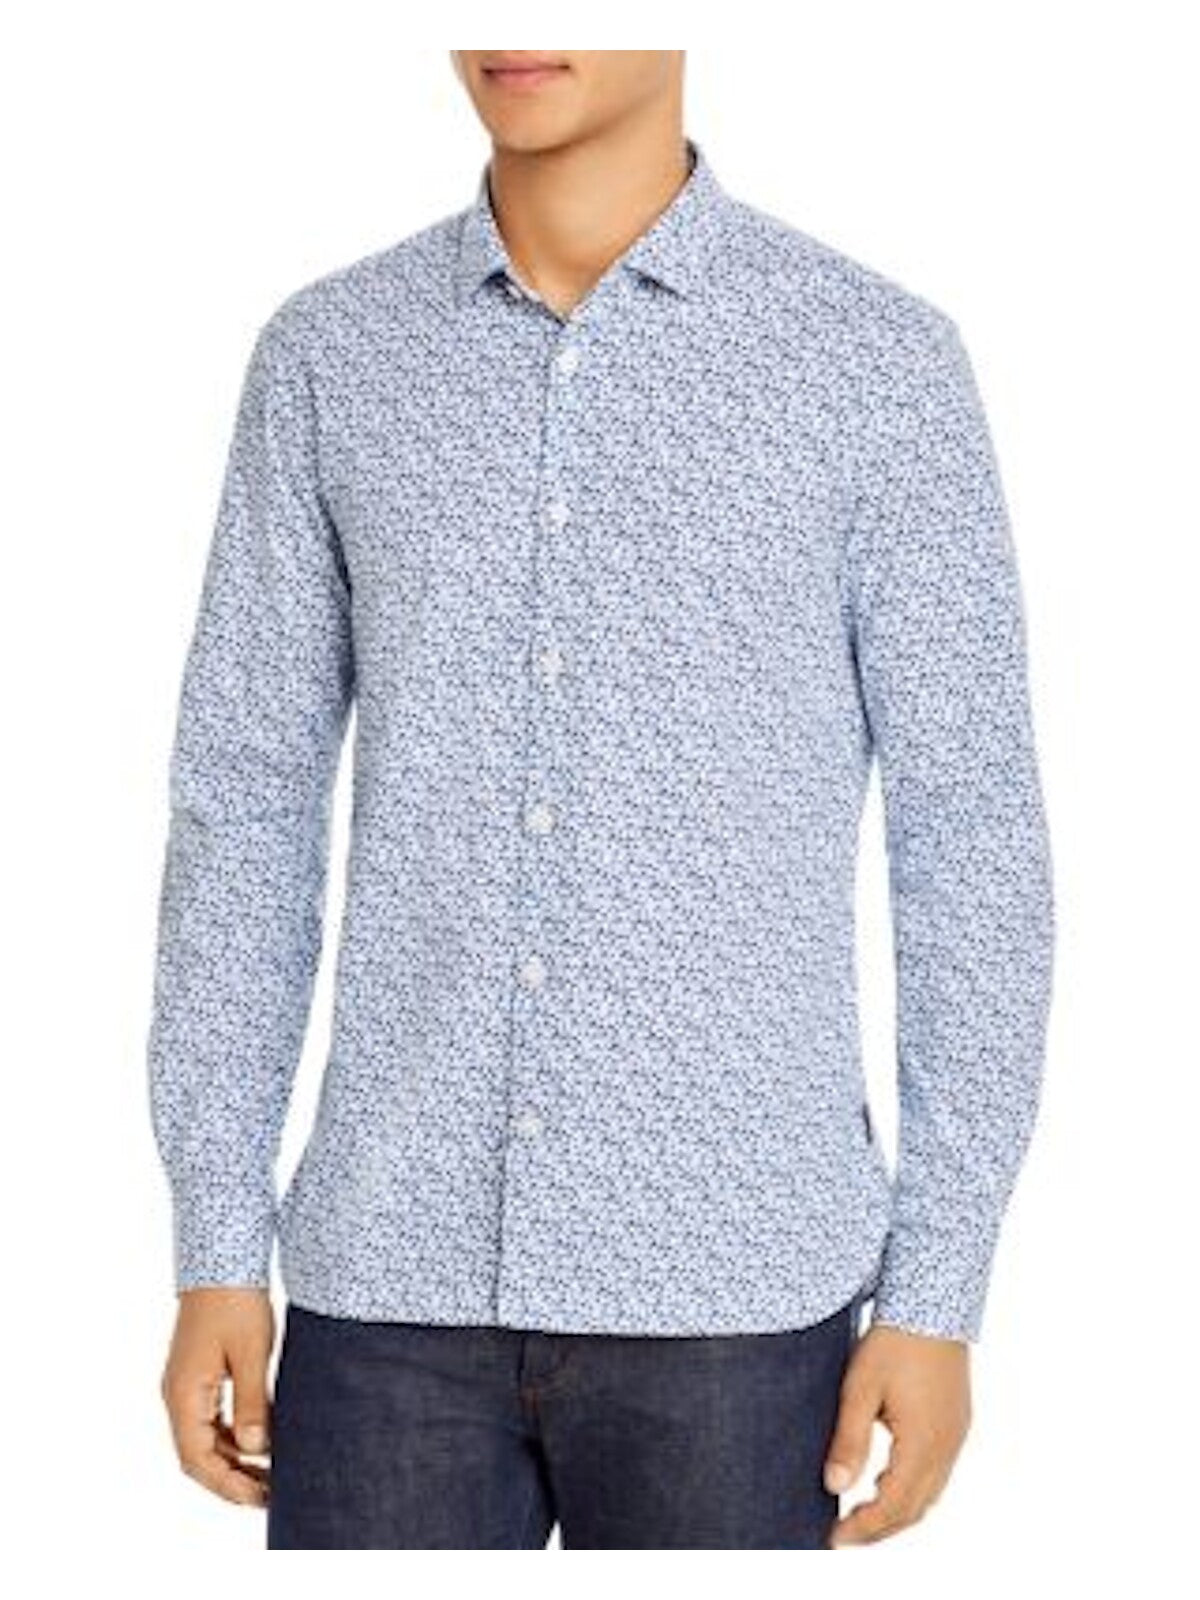 JOHN VARVATOS Mens Blue Floral Button Down Cotton Blend Casual Shirt XL